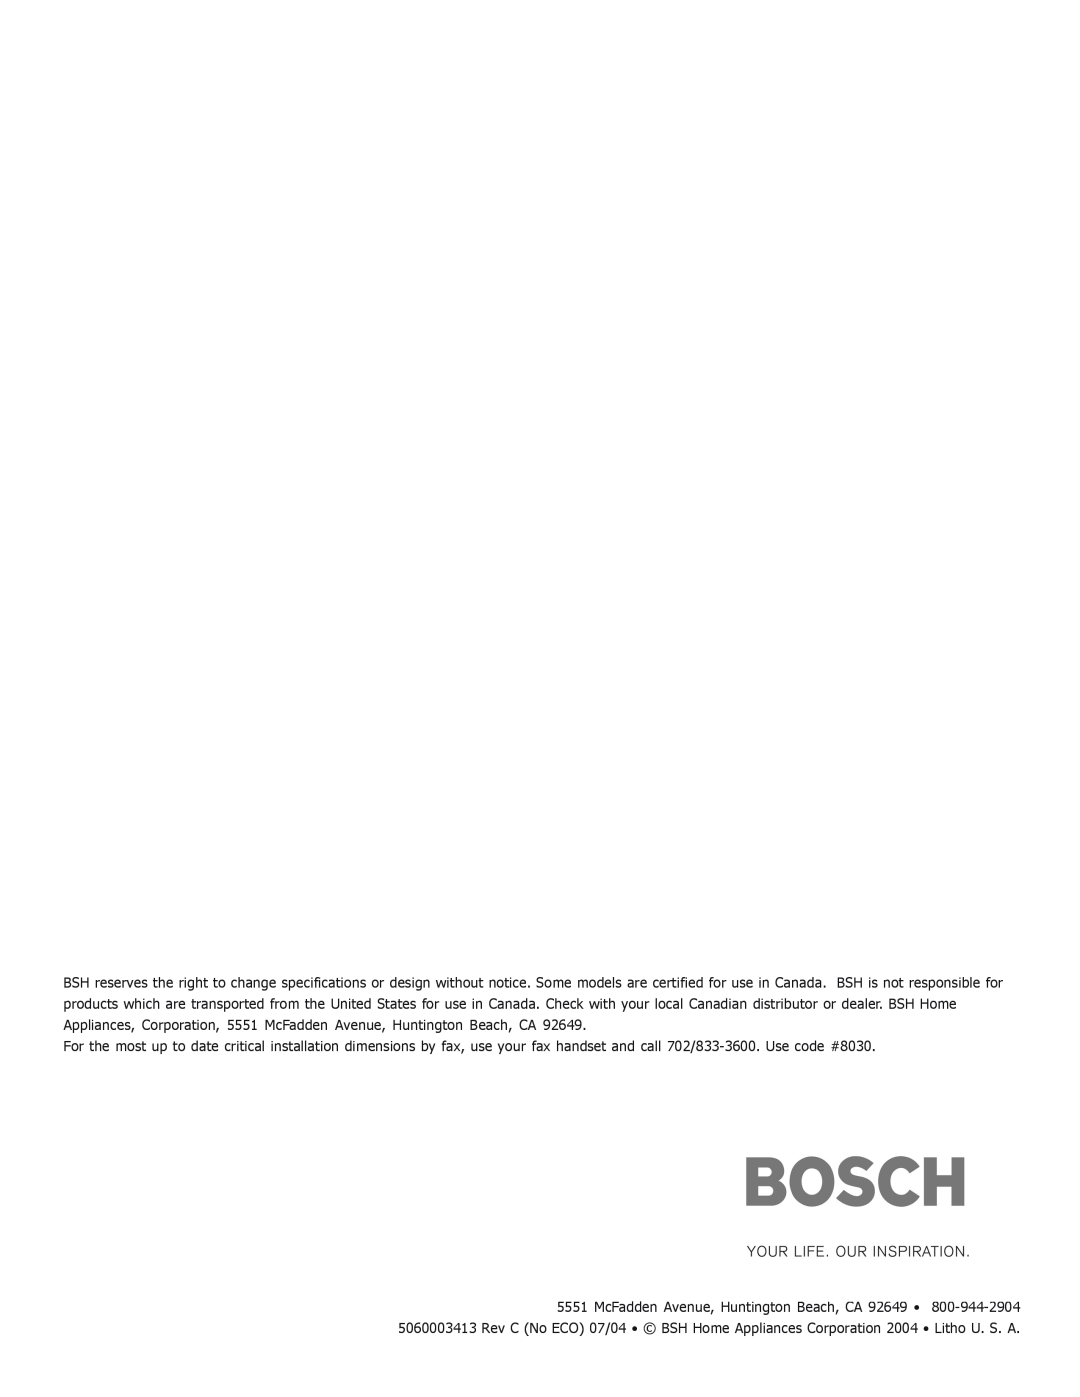 Bosch Appliances BOSCH GAS FREE-STANDING CONVECTION RANGE manual 